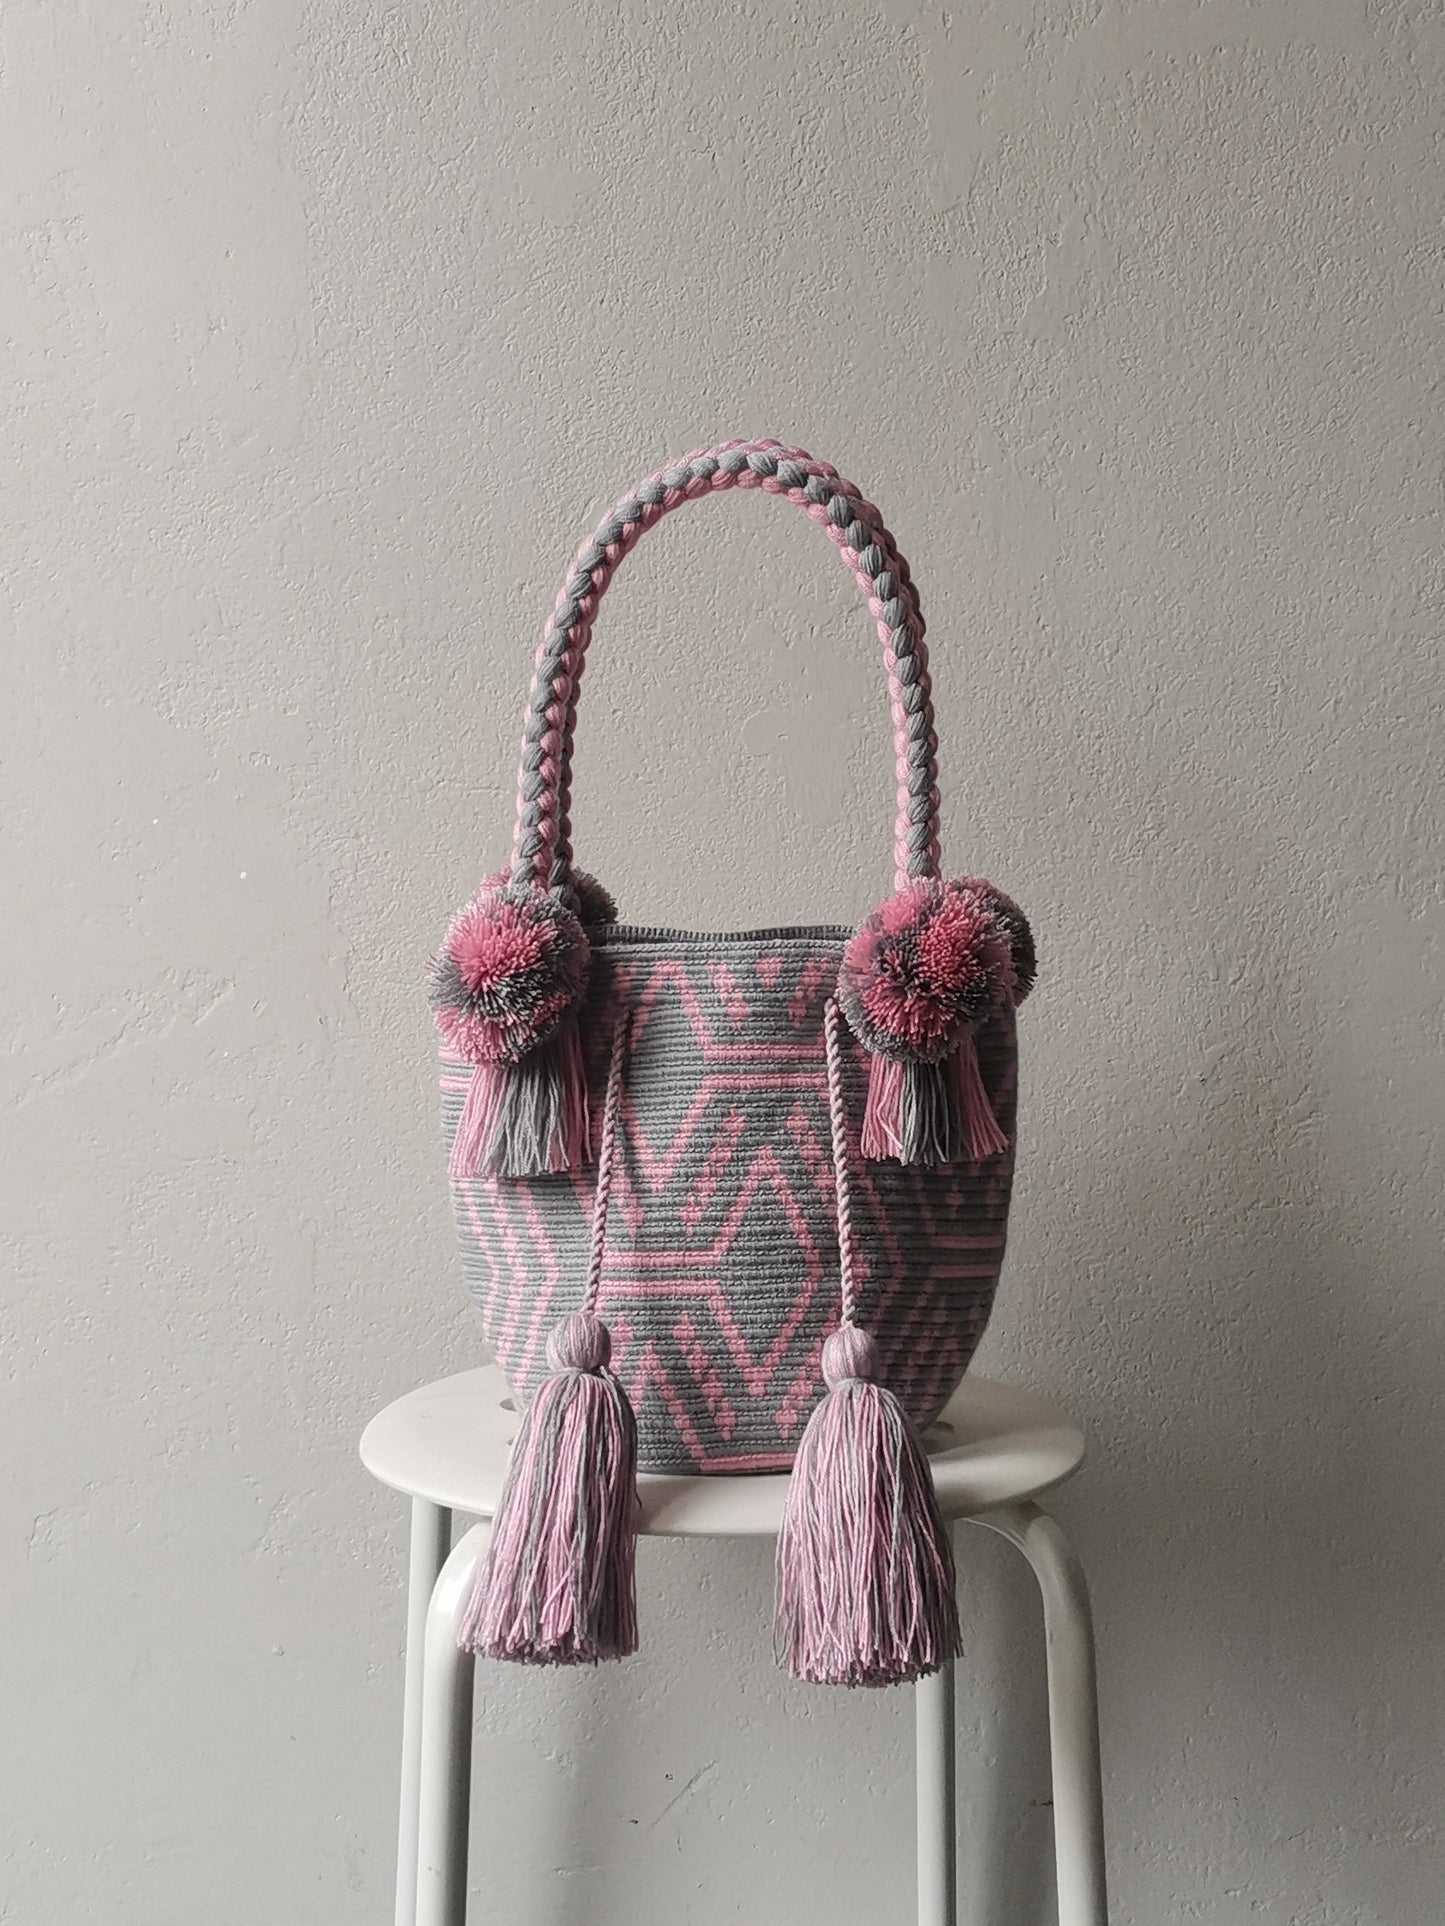 M pearl gray and pink mochila handbag